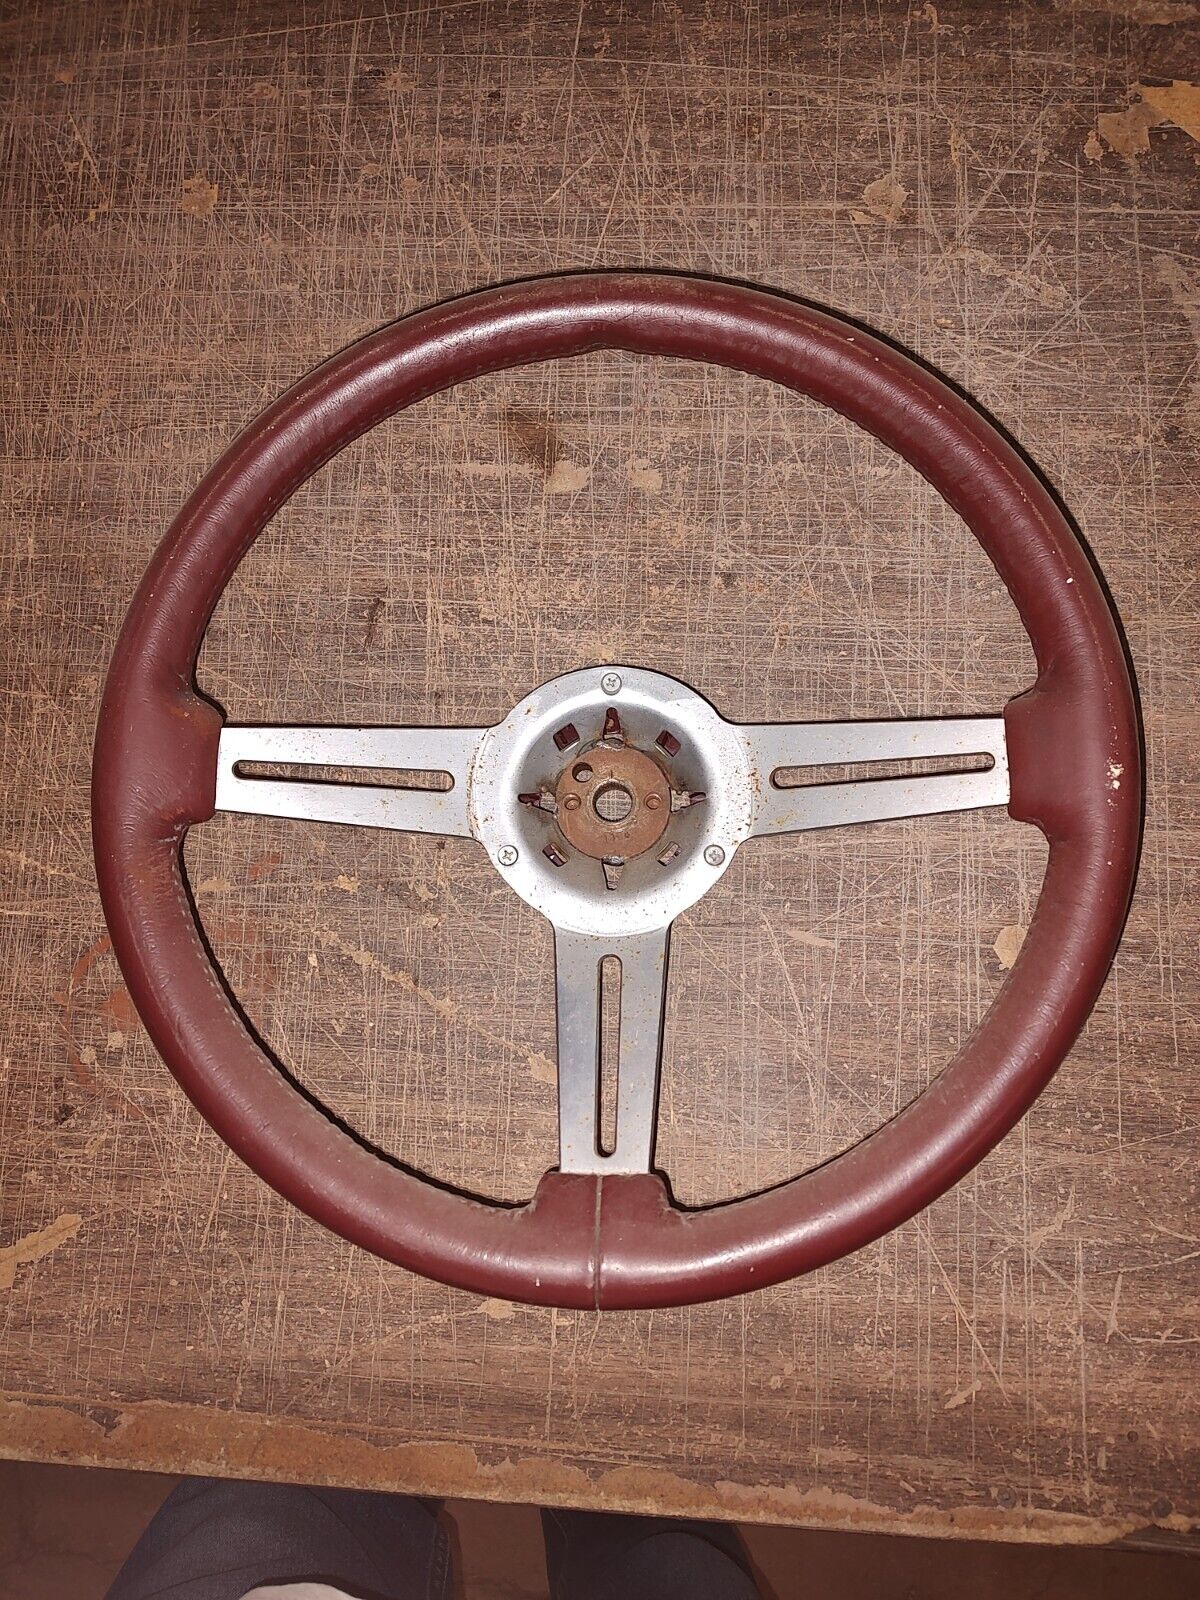 Cutlass 442 Hurst/Olds Toronado  Comfort Grip Steering Wheel 